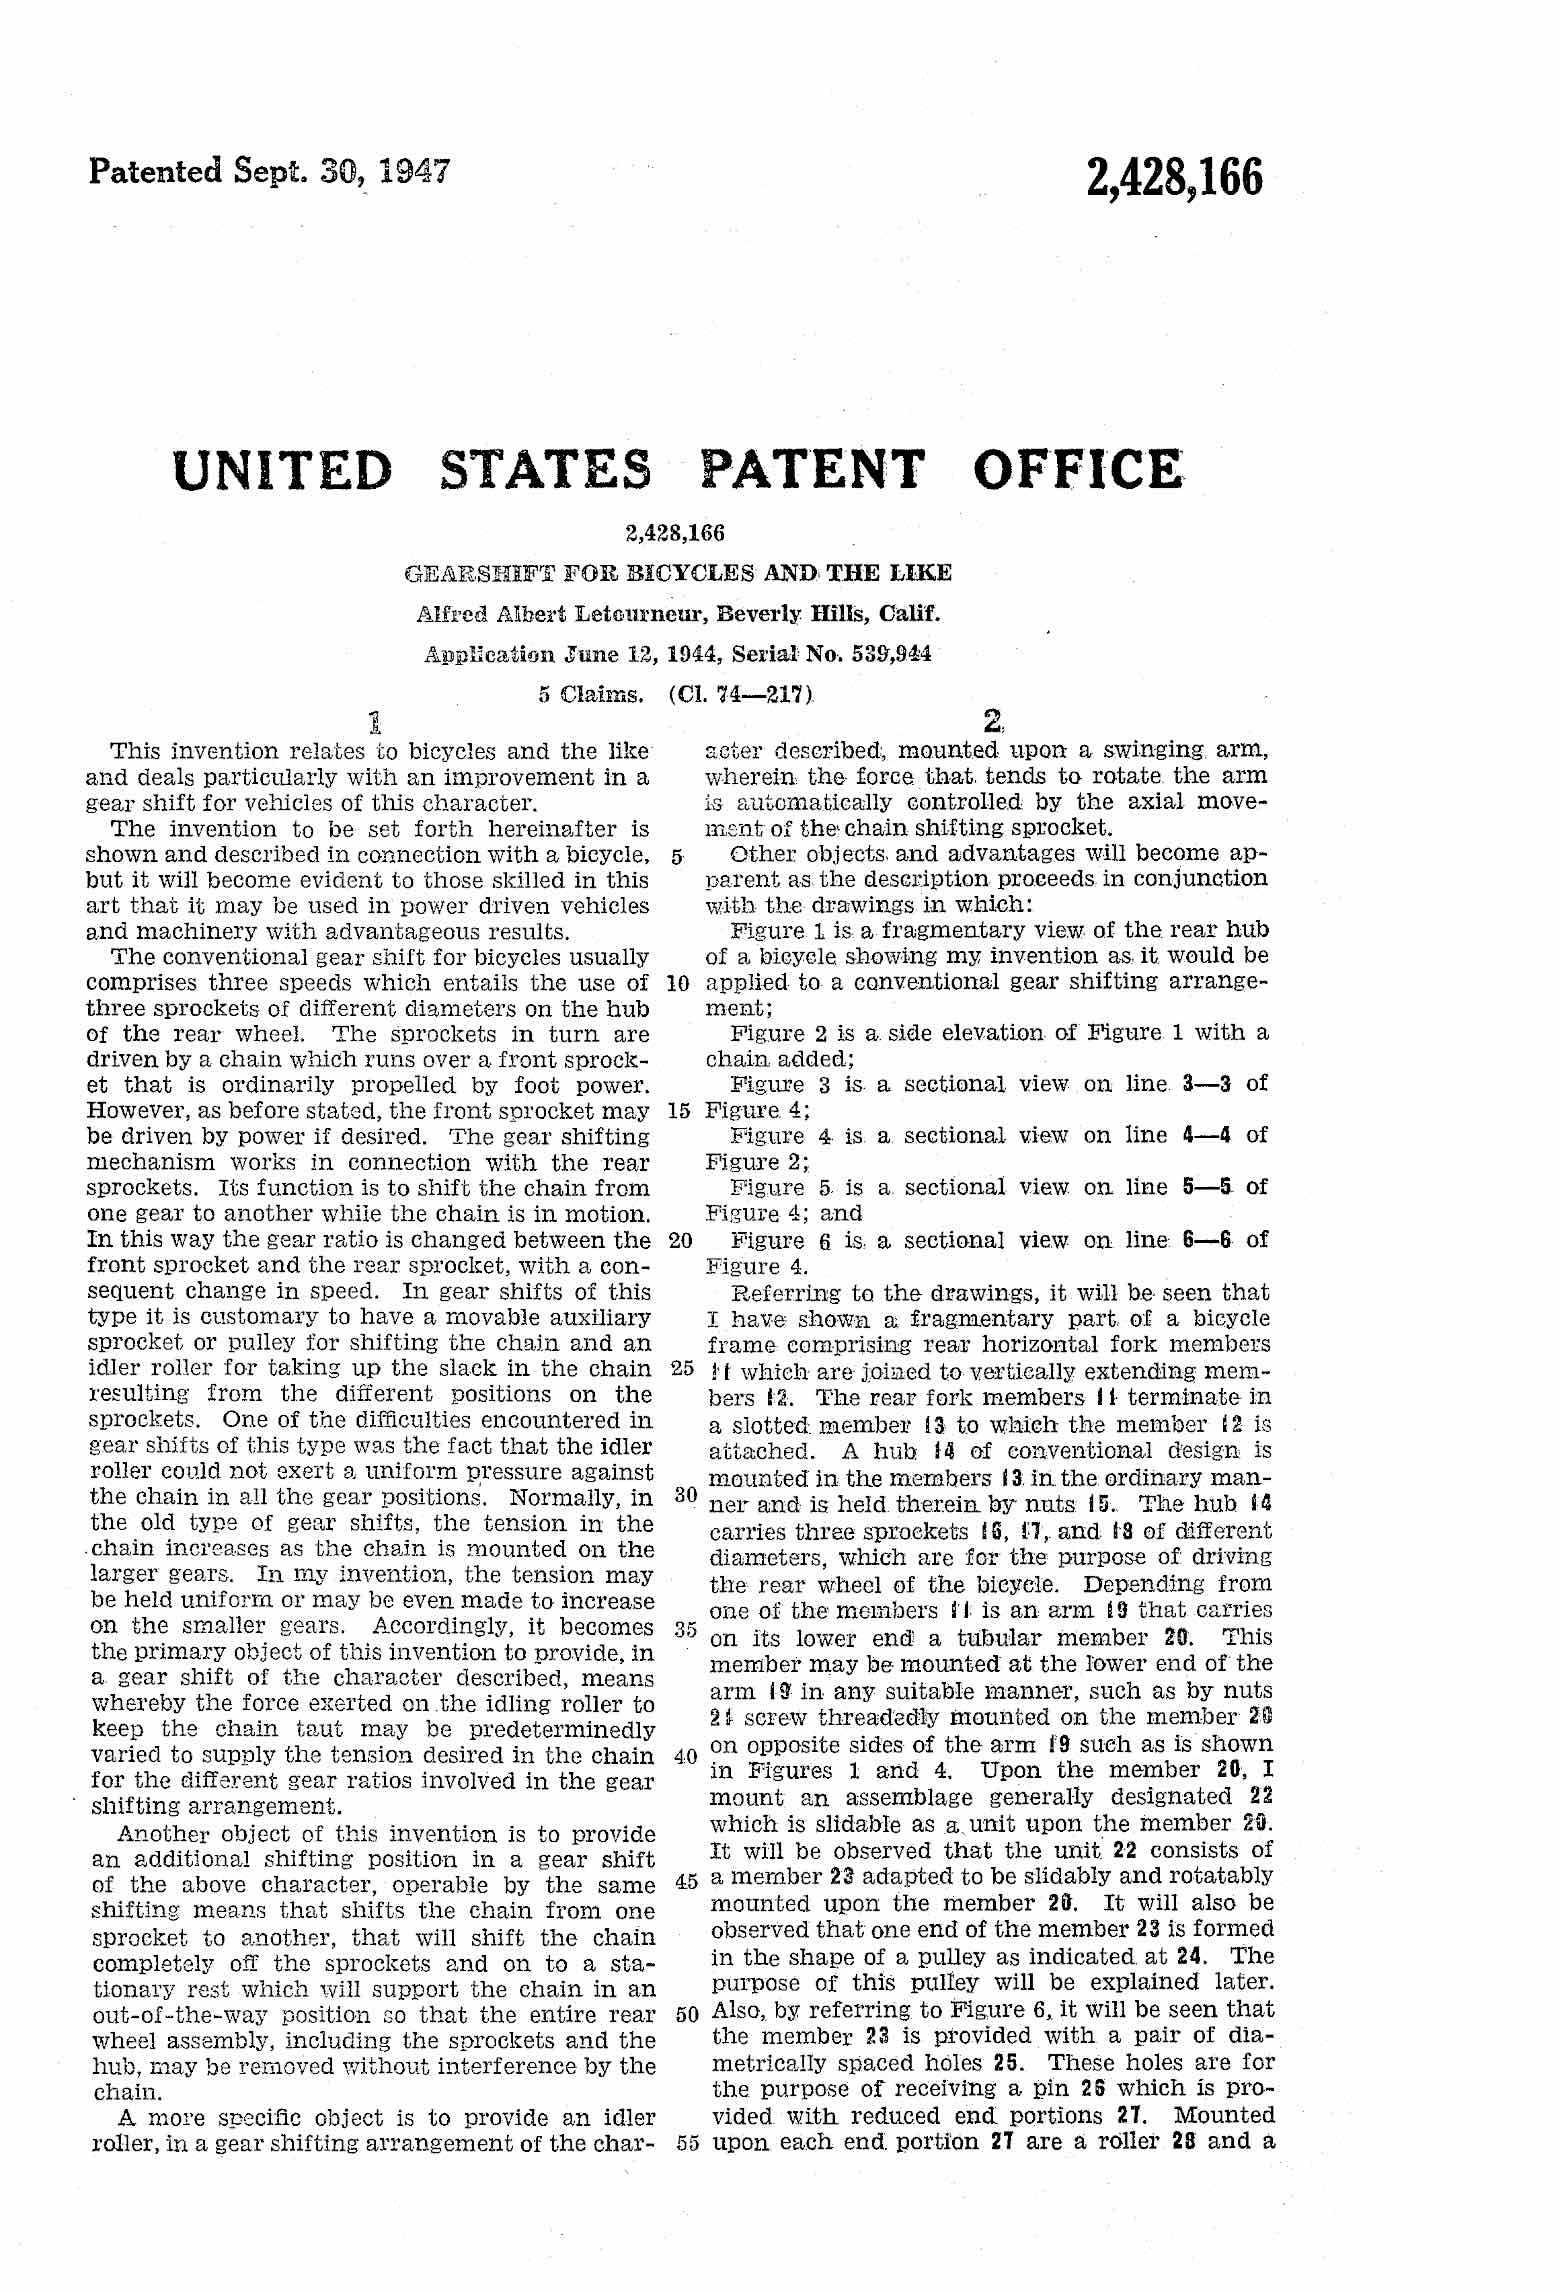 US Patent 2,428,166 - Alfred Letourneur scan 1 main image